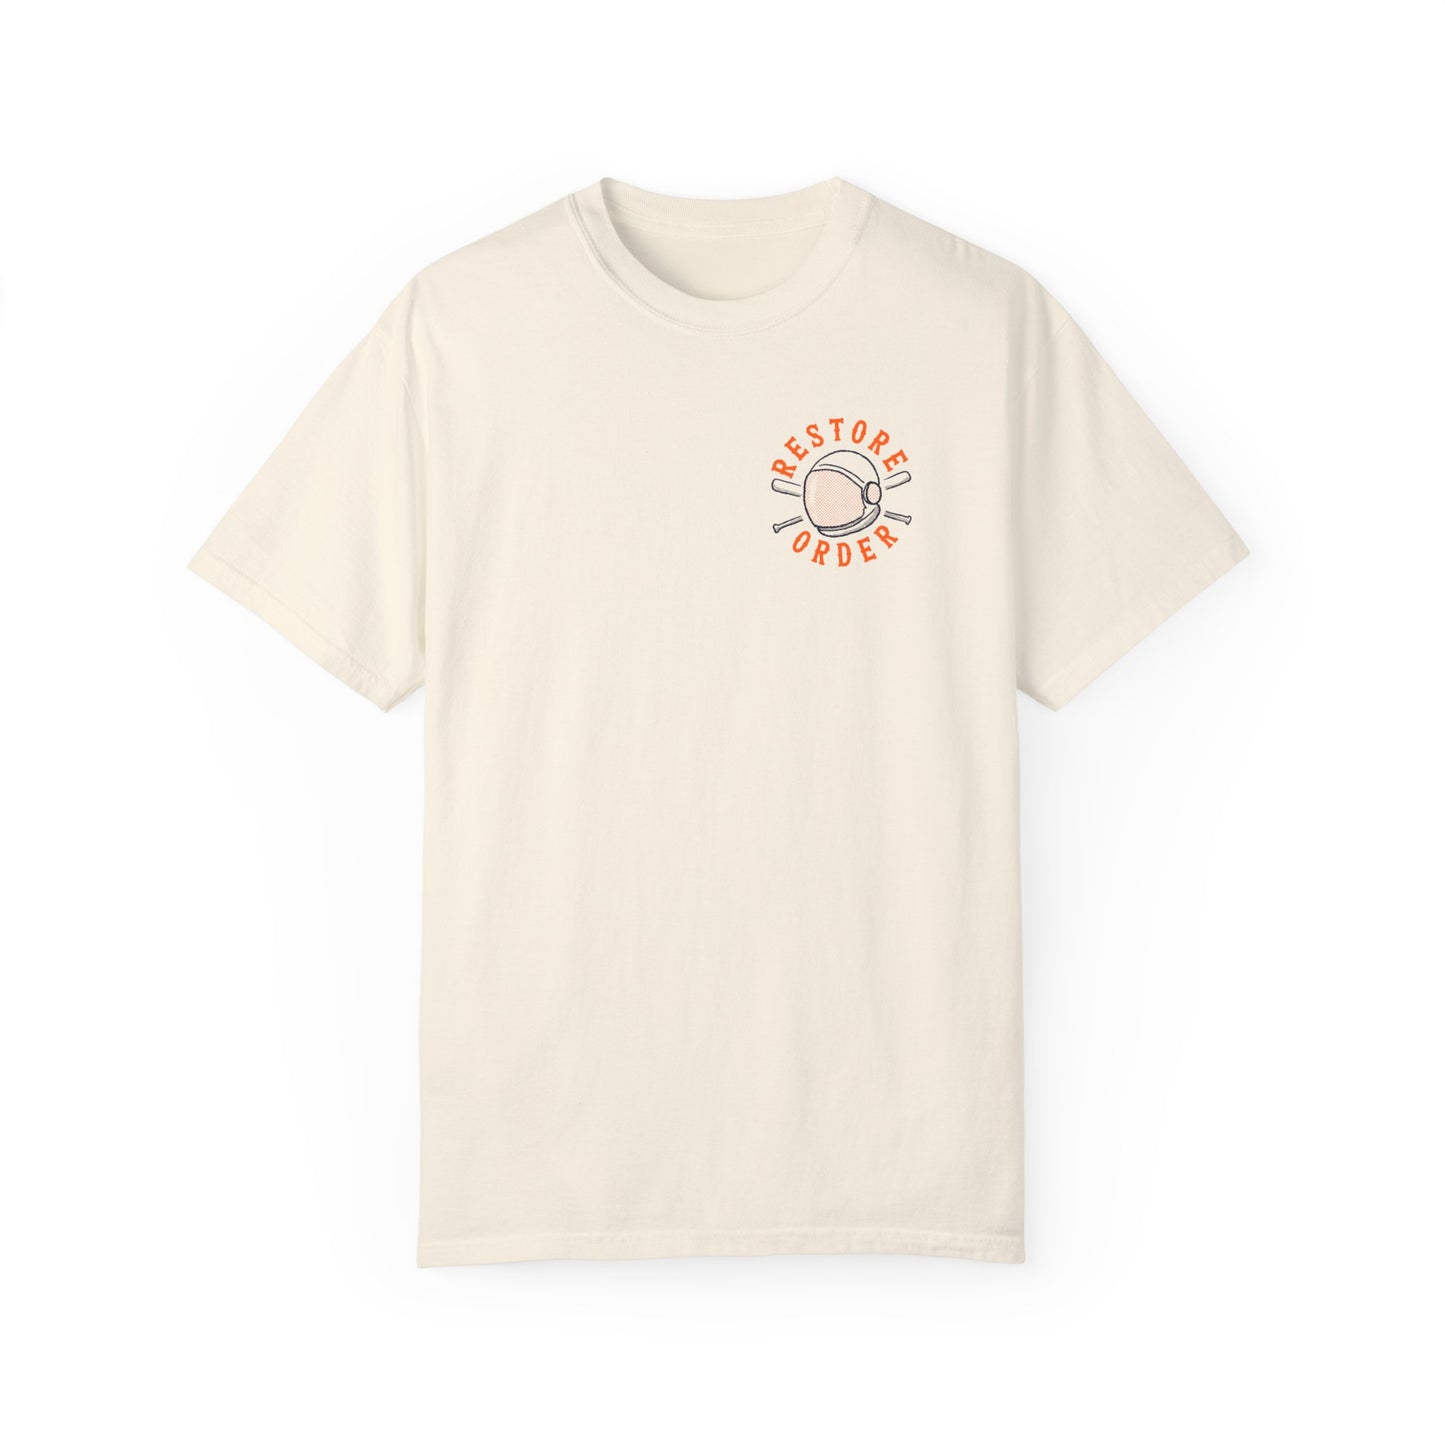 Restore Order (Front & Back) Unisex Comfort Colors T-shirt - Saturn